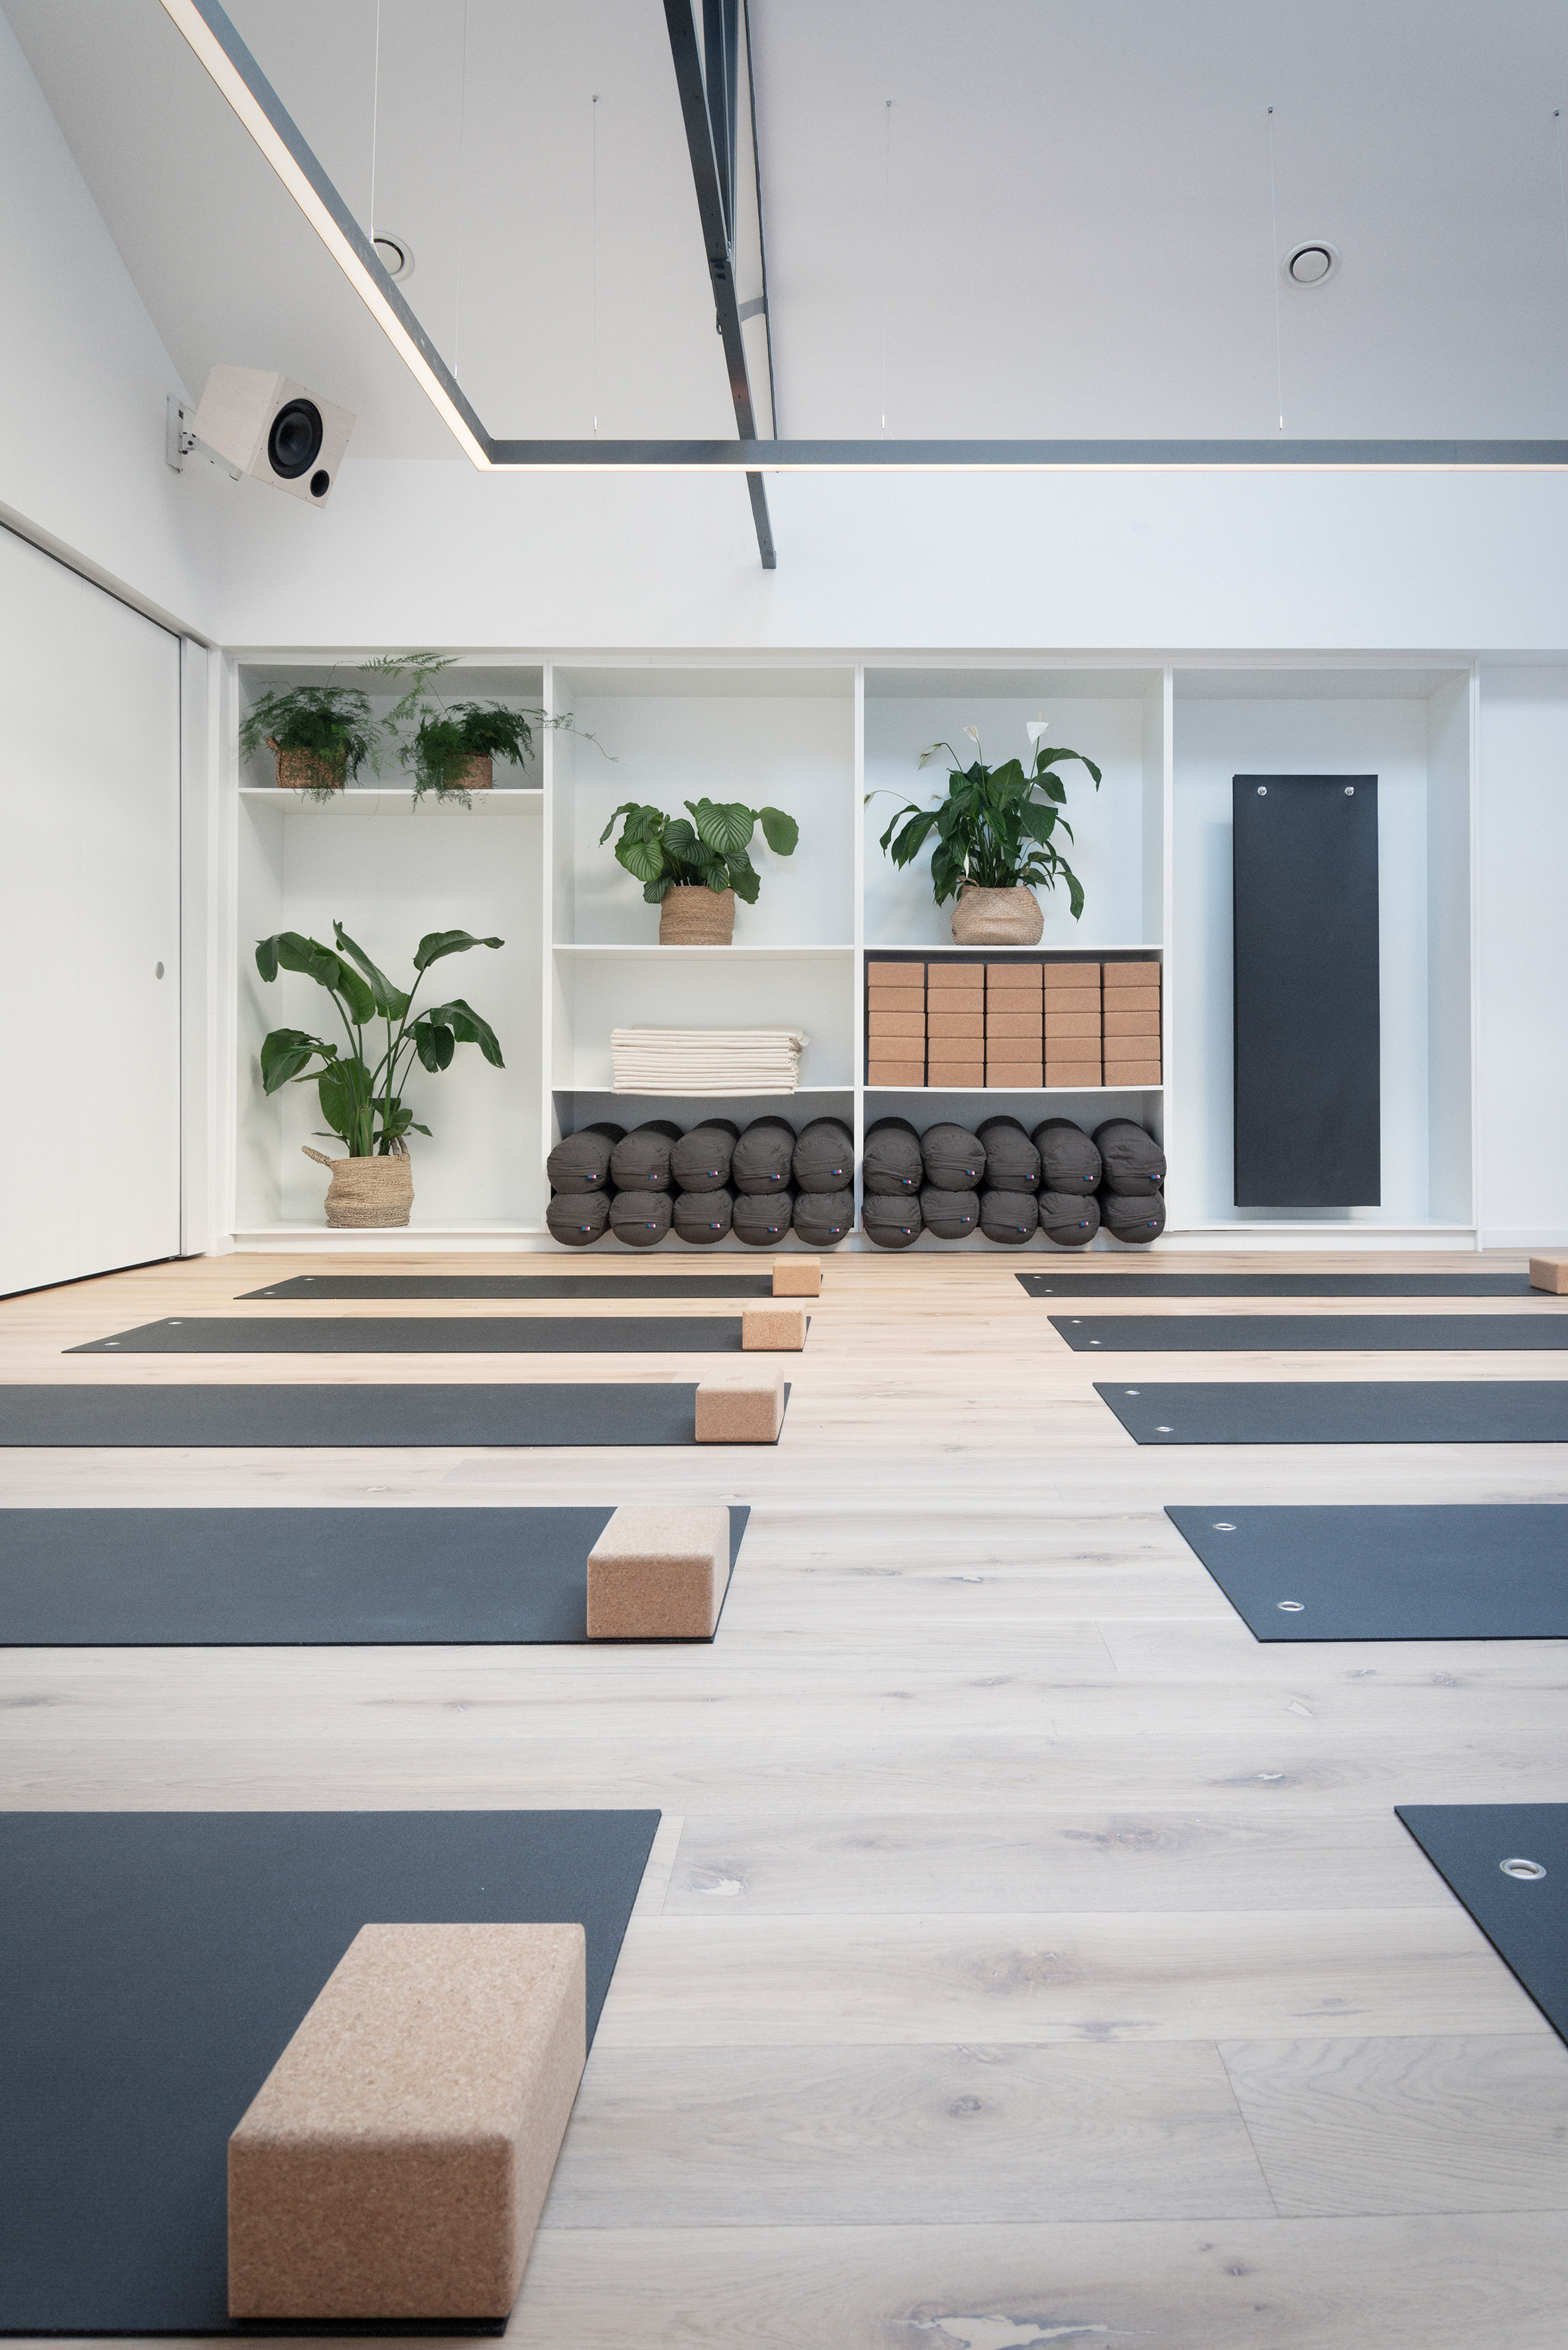 The Space Between yoga studio by Jordan Ralph Design